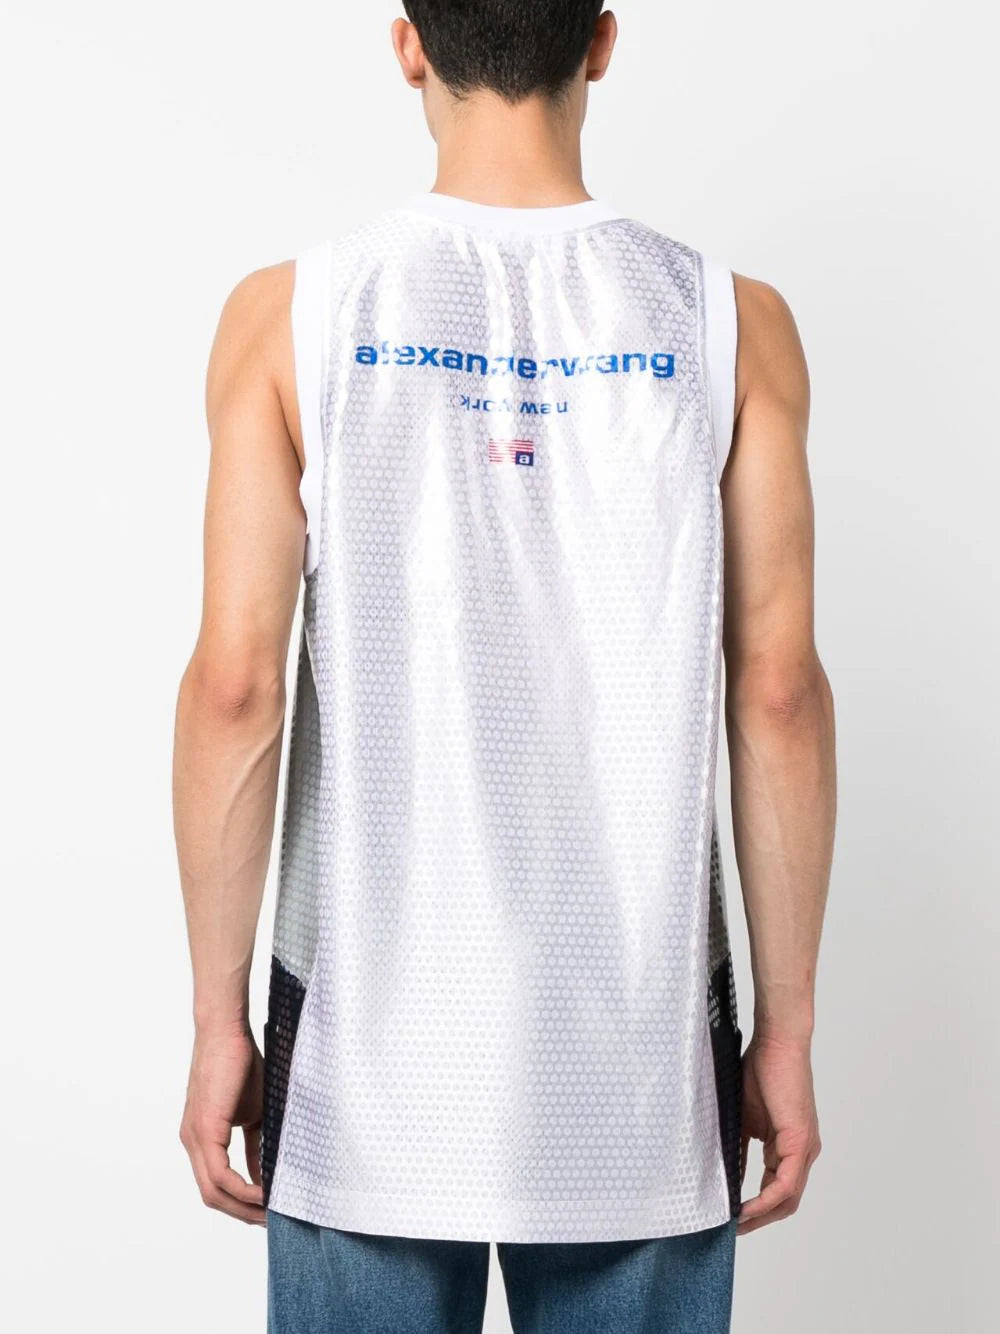 ALEXANDER WANG UNISEX Basketball Sequins Tank Top White/Multicolour - MAISONDEFASHION.COM